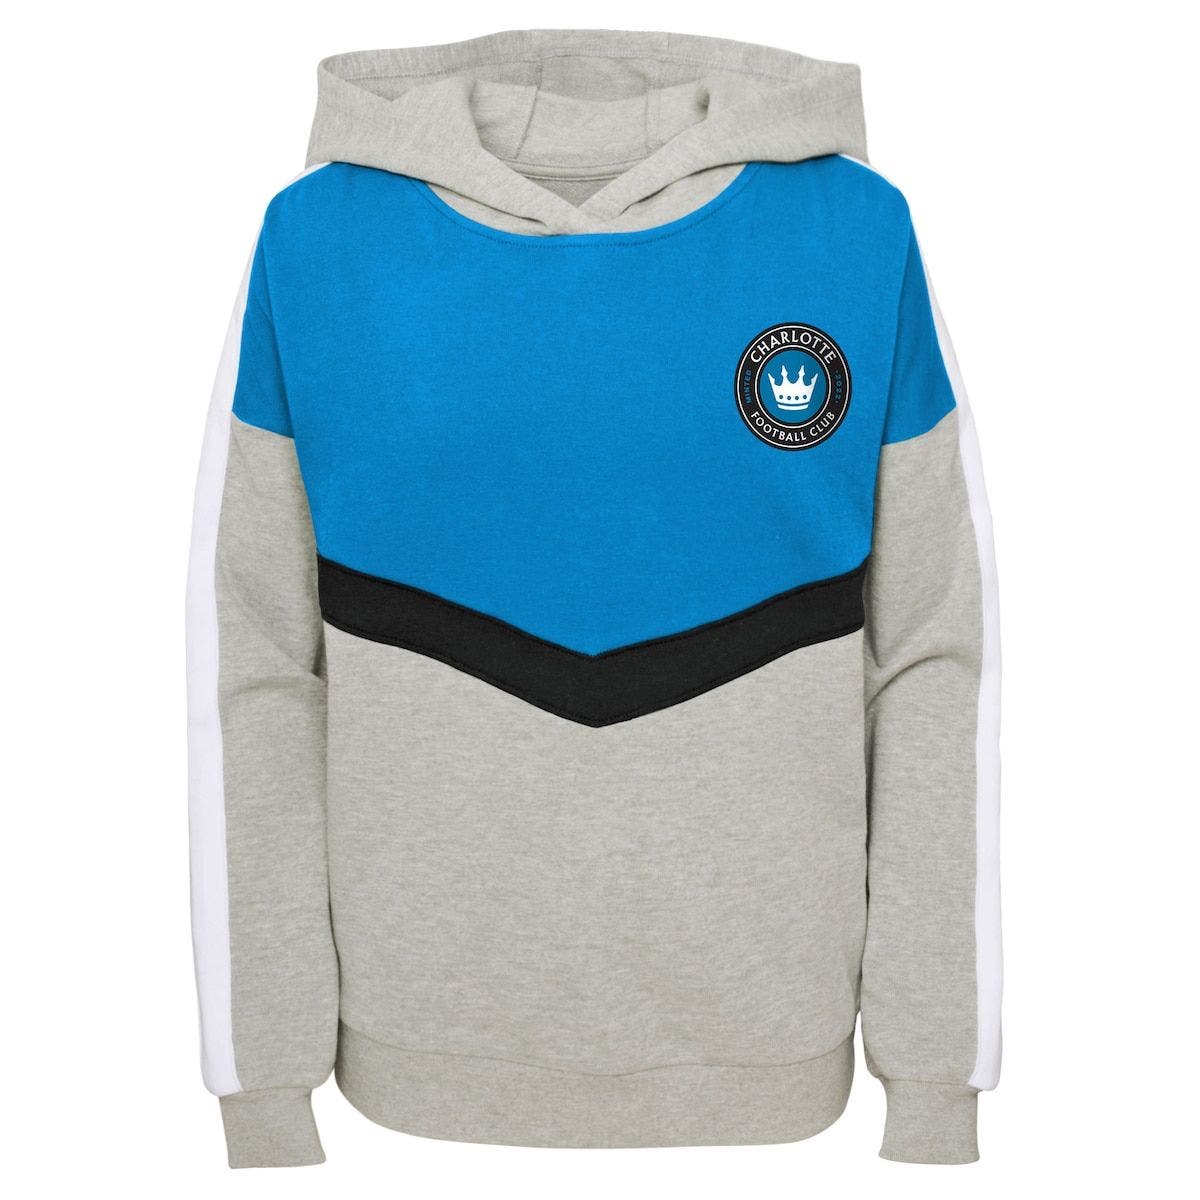 Reima Lively Sweater Jugend blueish Grey 2020 Jacke